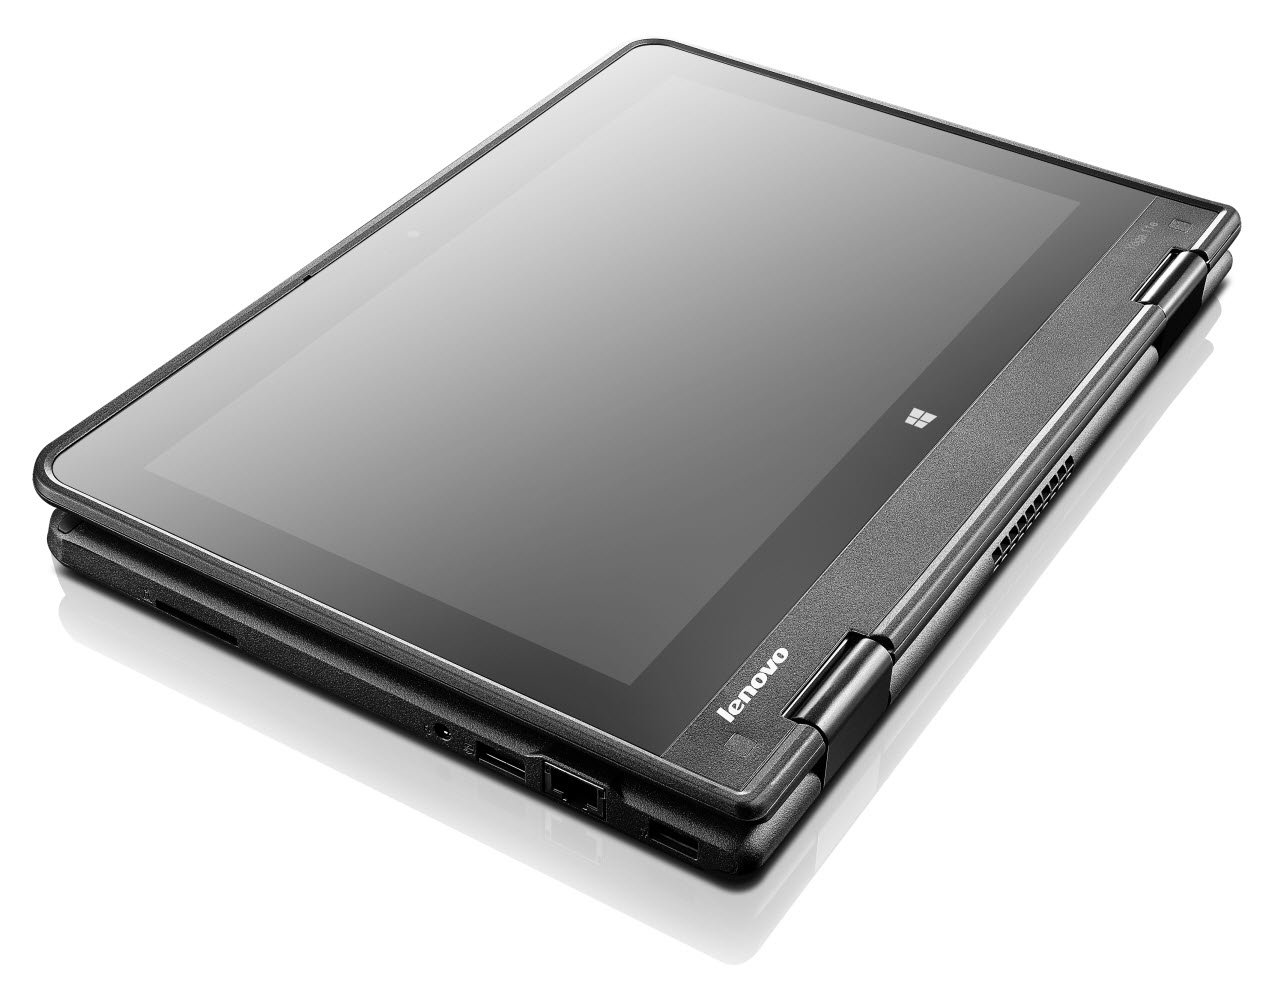 Lenovo Thinkpad Yoga 11E-G3 Convertible, Intel:N3160/CQC, 1.6 GHz, 128 GB, Intel-HD/IGP, Windows 10 Home Edition-64 bit, Black, 11.6" HD Touch